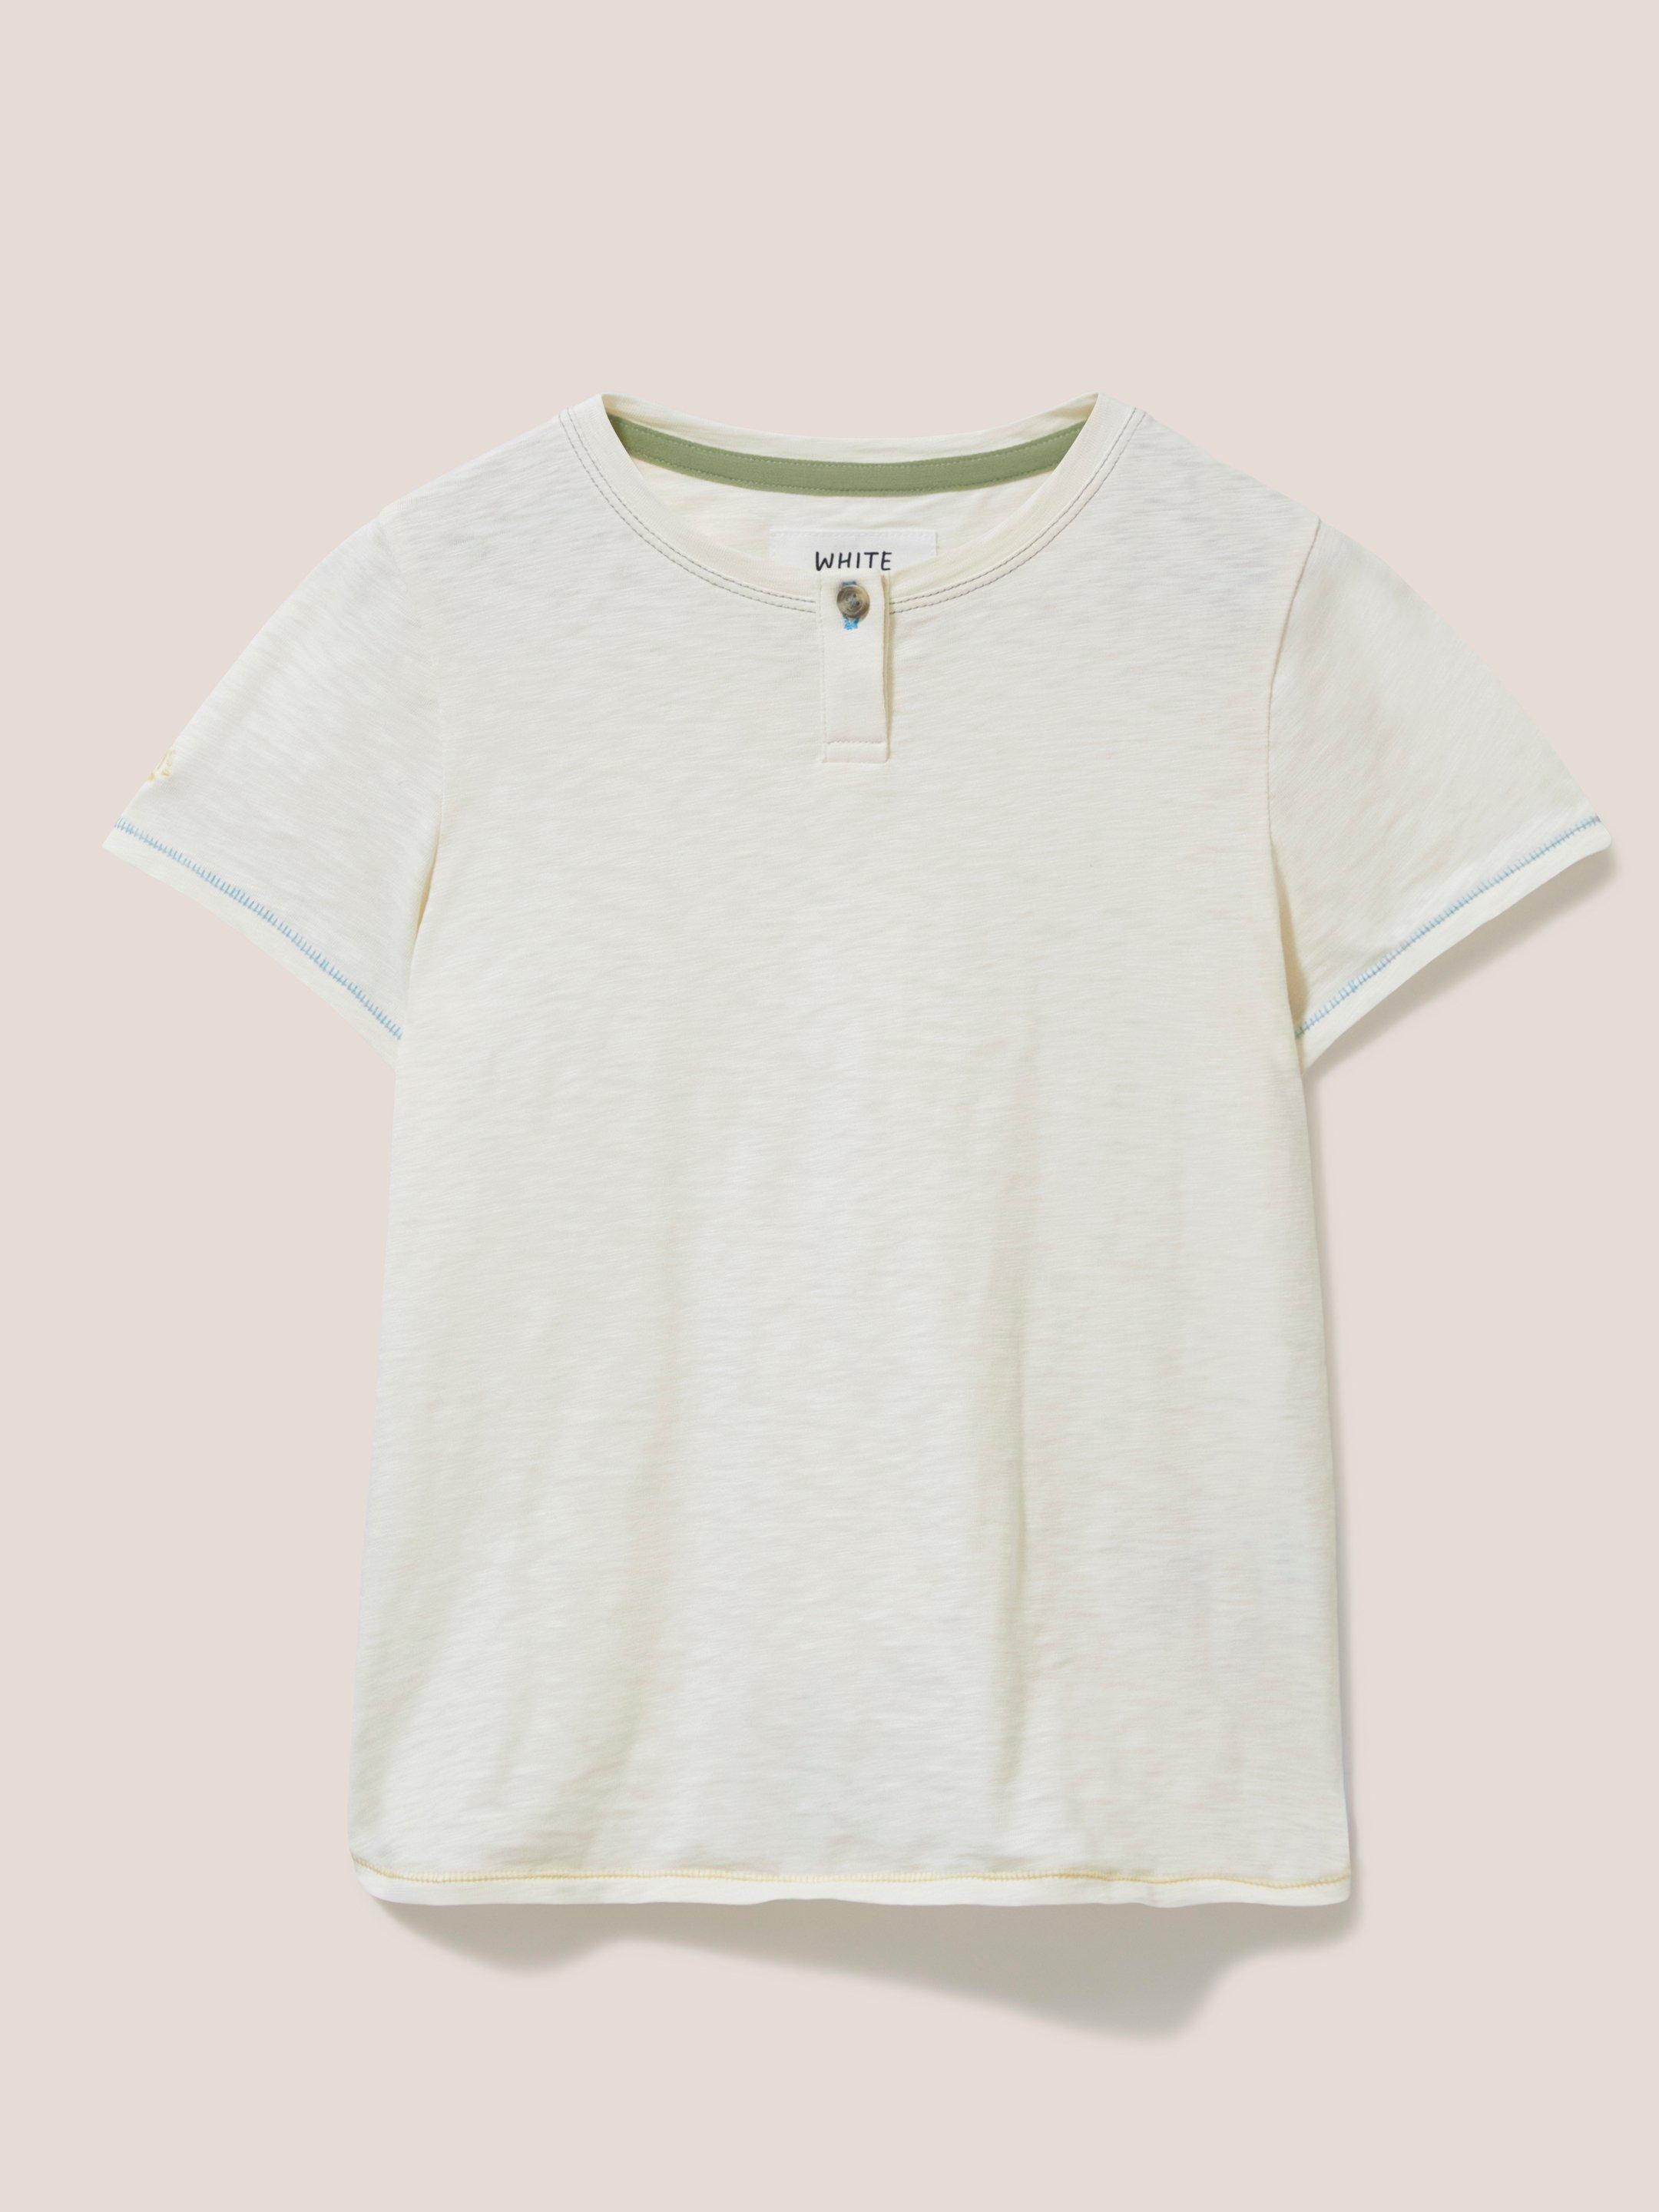 Casey Plain SS T Shirt in NAT WHITE - FLAT FRONT